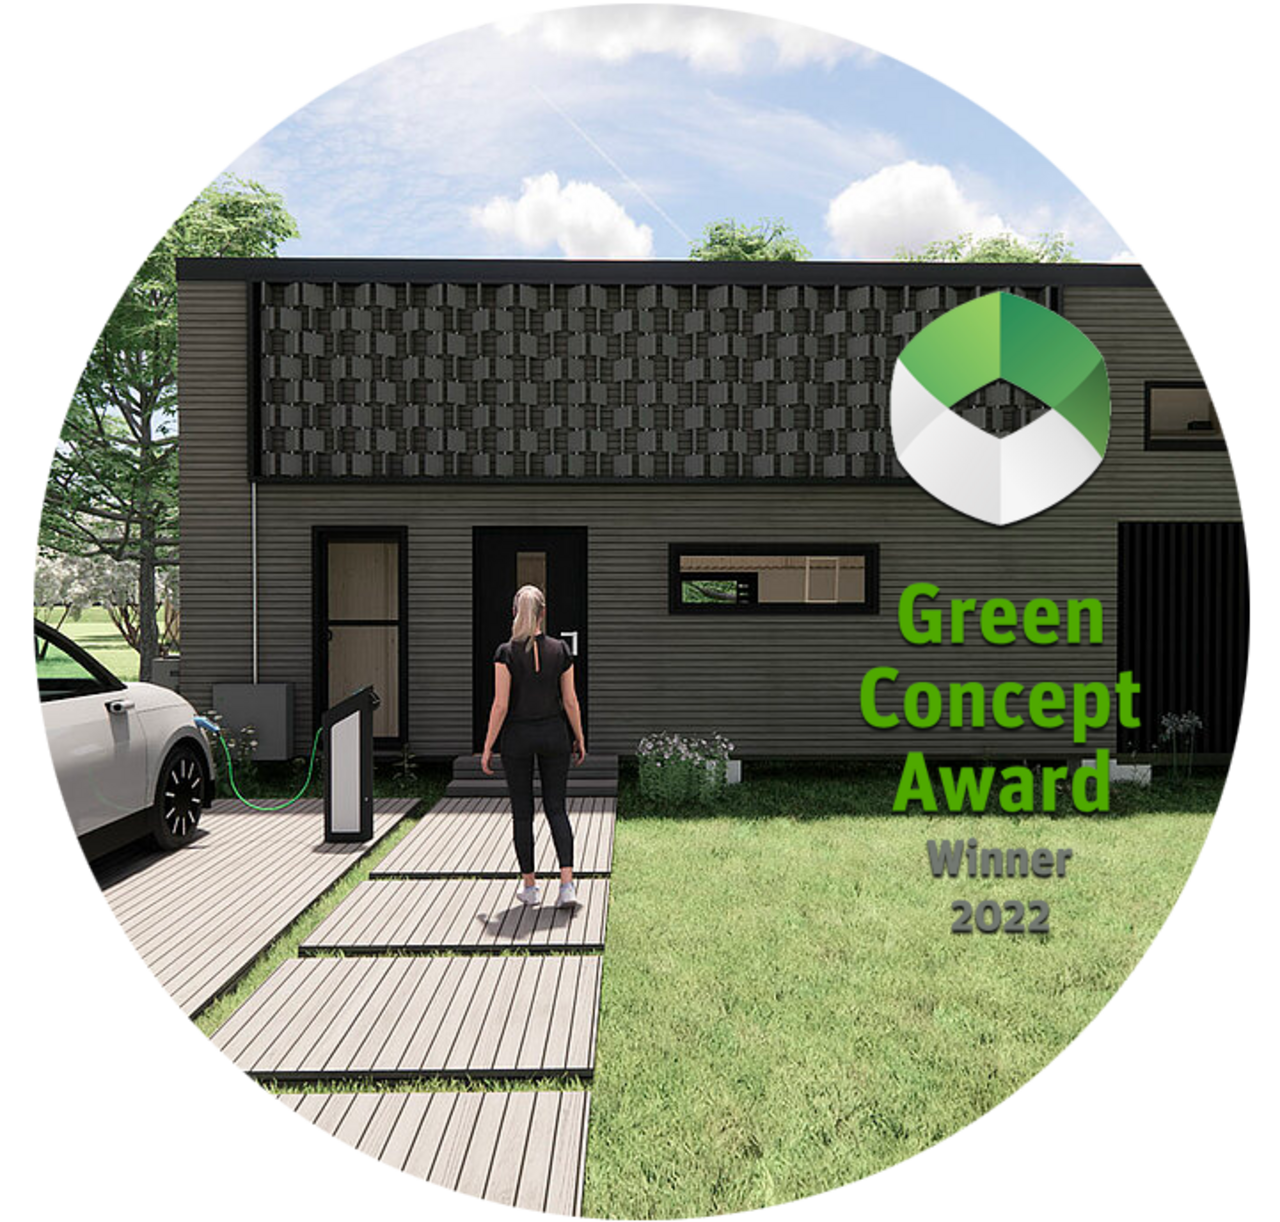 Green Concept Award Winner Sustainable Living Cuboid